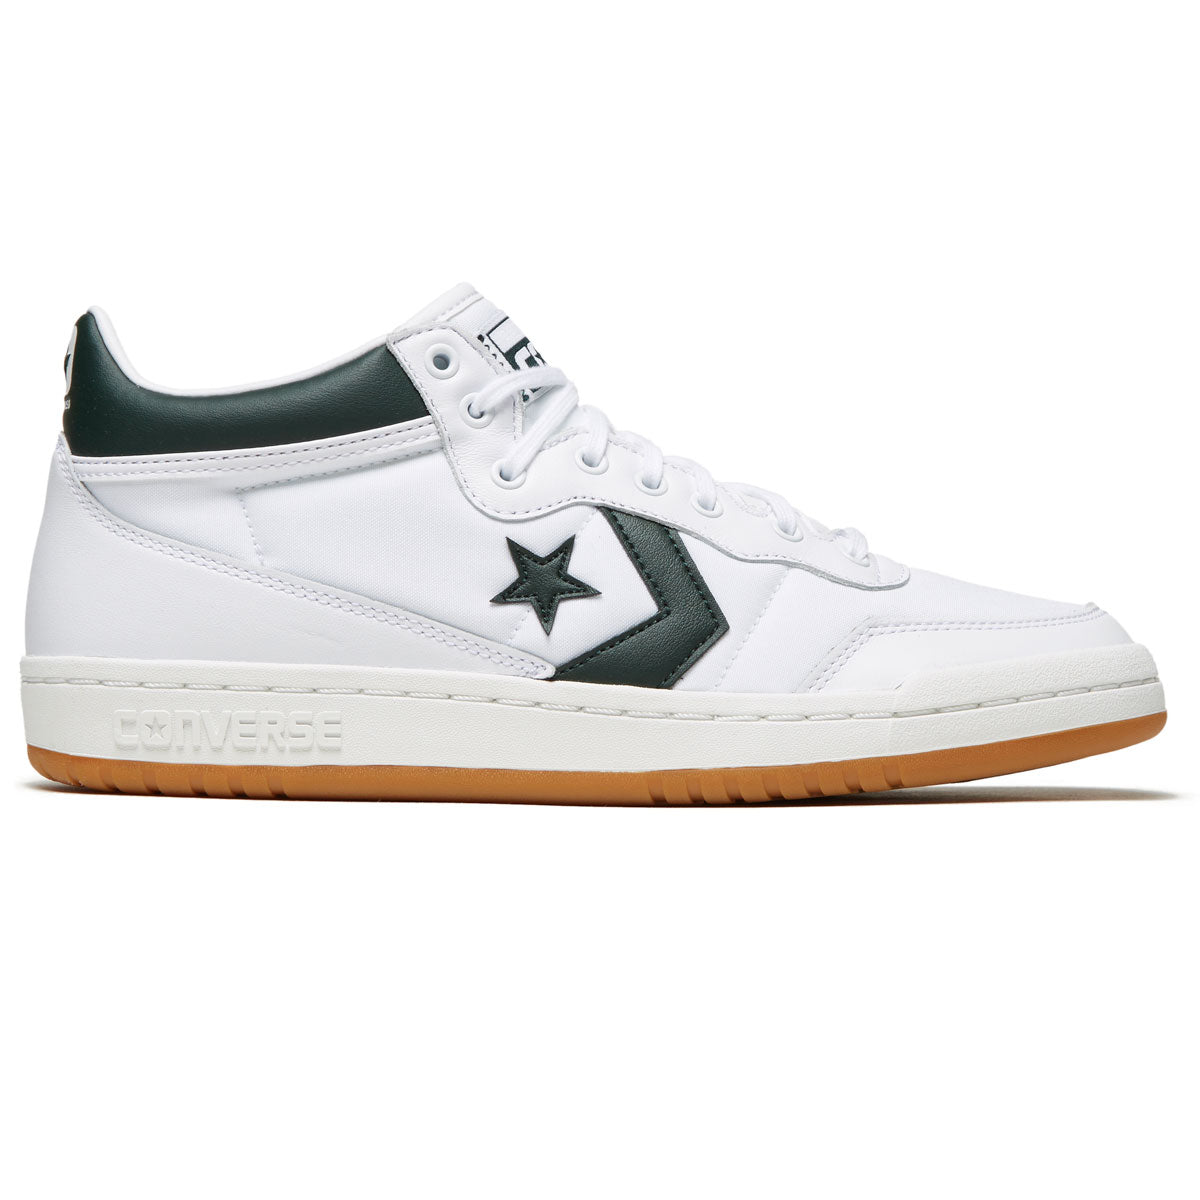 Converse Fastbreak Pro Leather Mid Shoes - White/Deep Emerald/Gum image 1